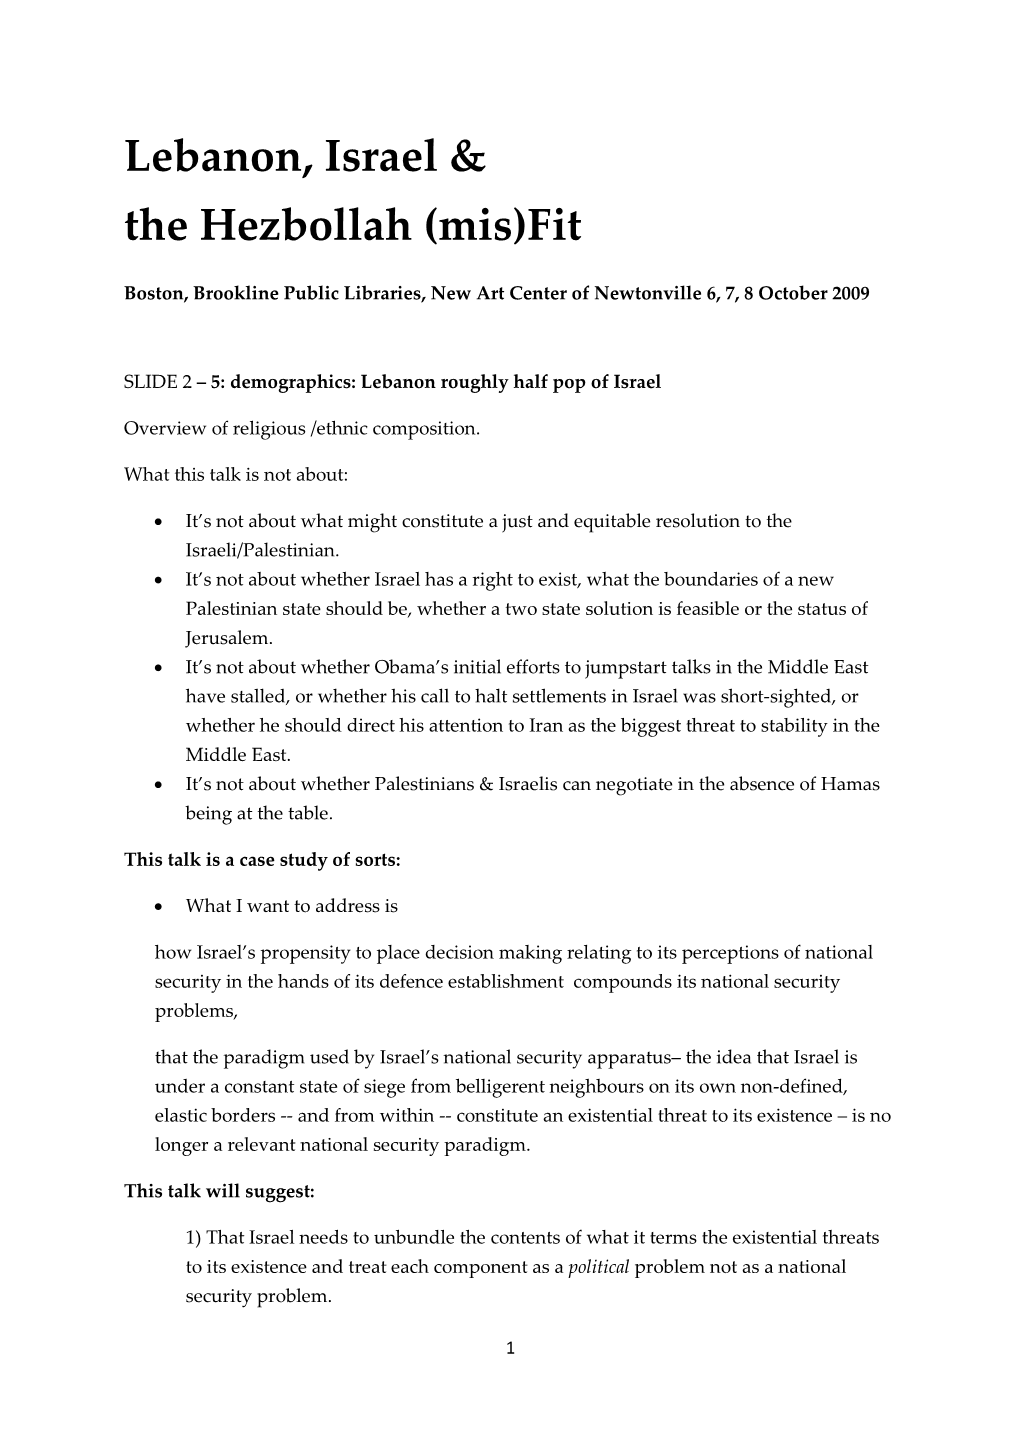 Lebanon, Israel & the Hezbollah